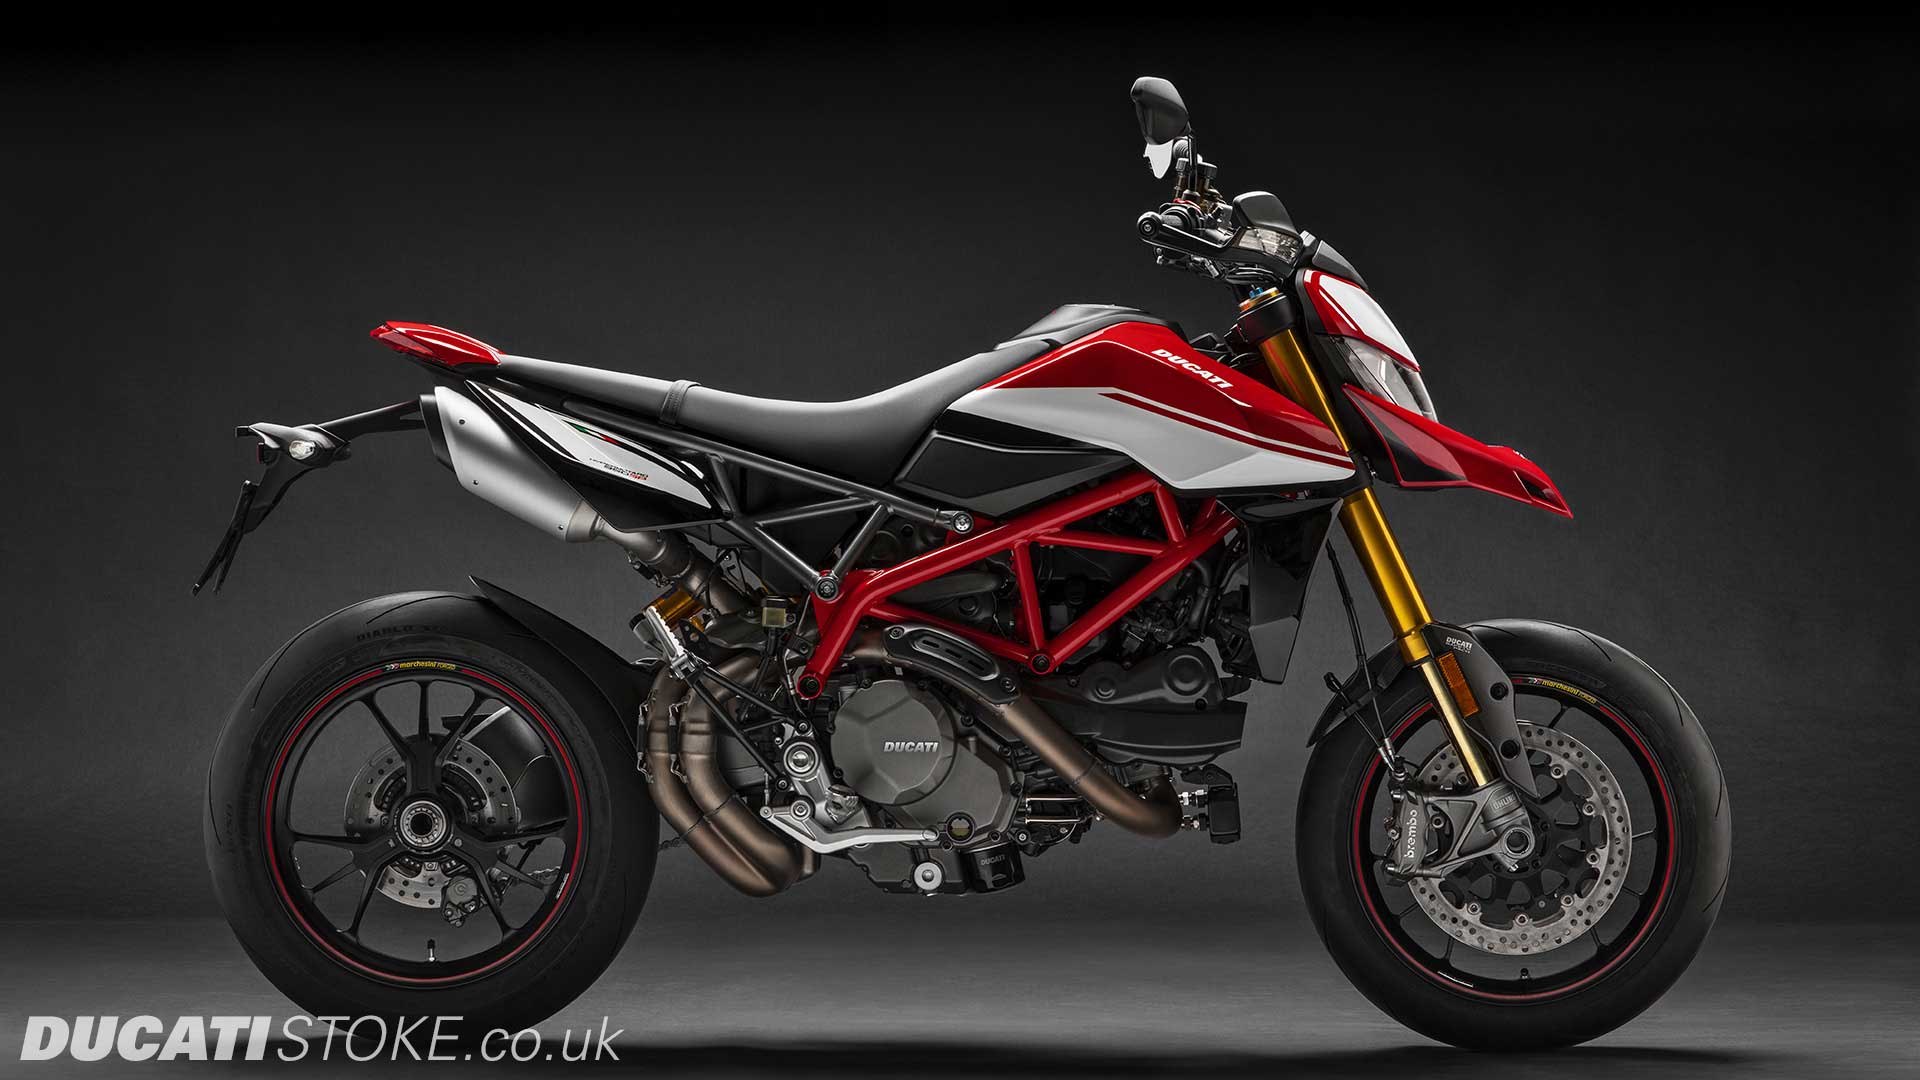 2019 Ducati Hypermotard 950 SP for sale at Ducati Preston, Lancashire, Scotland